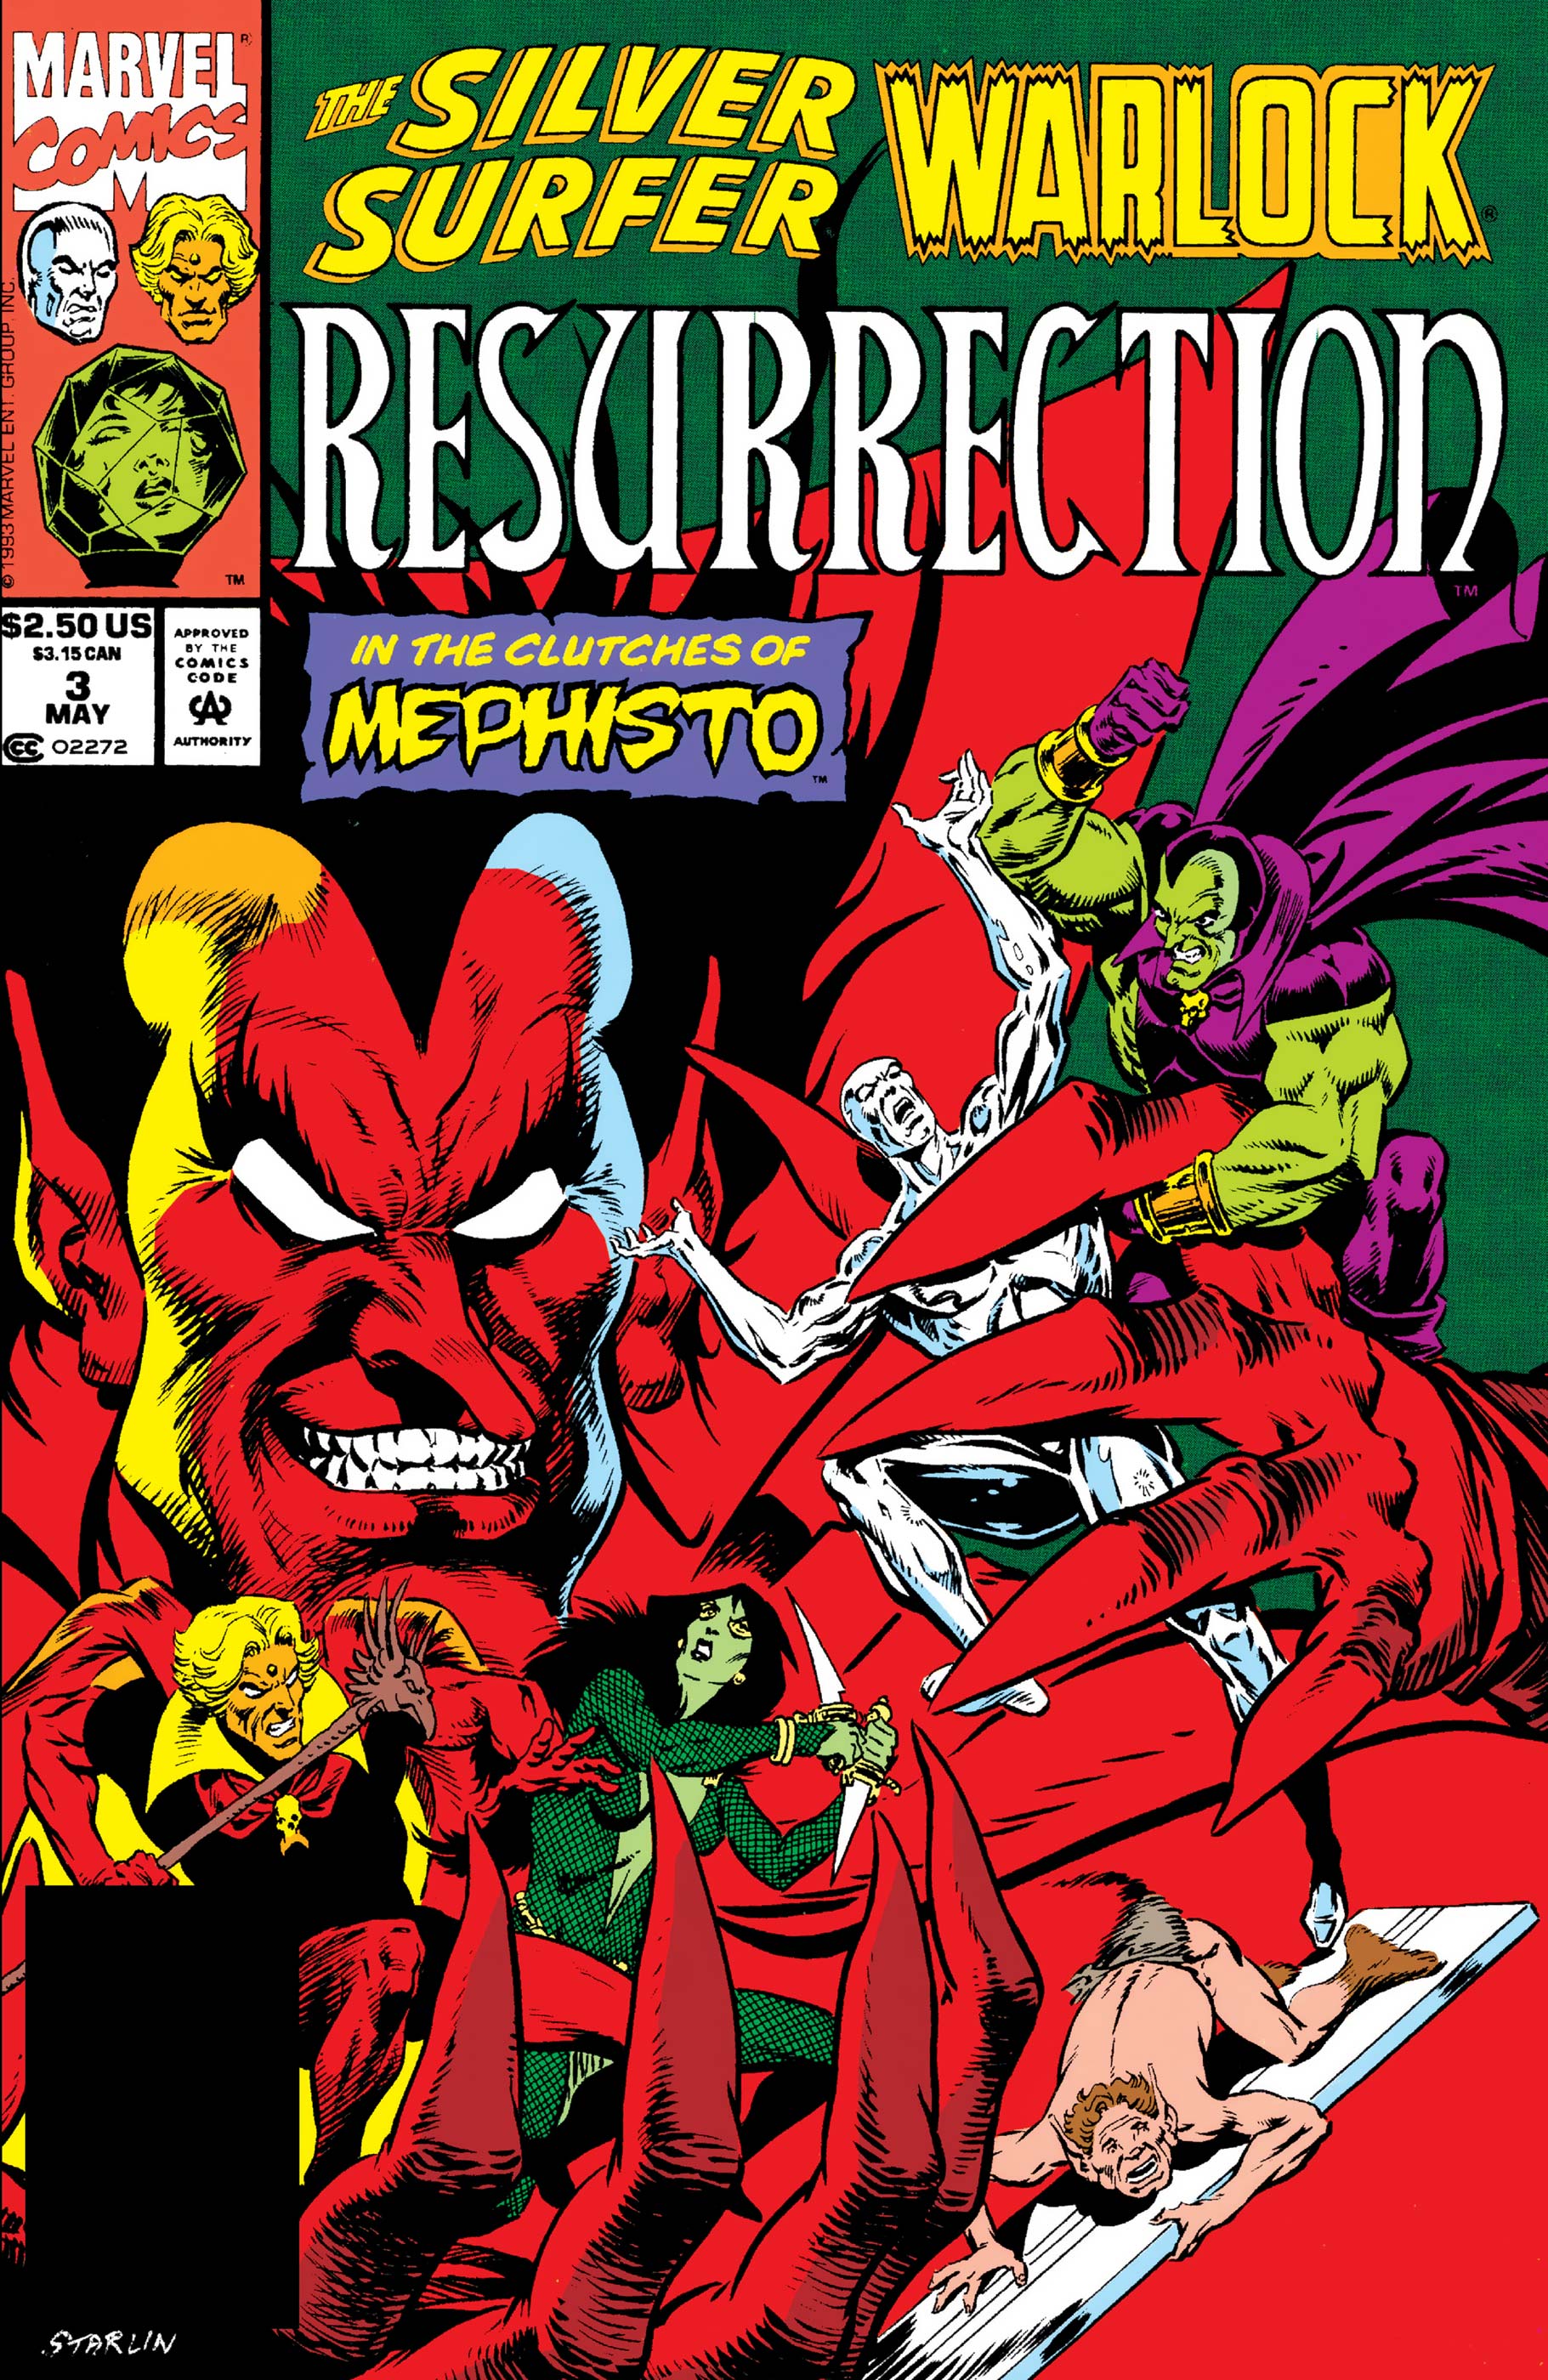 Silver Surfer/Warlock: Resurrection (1993) #3